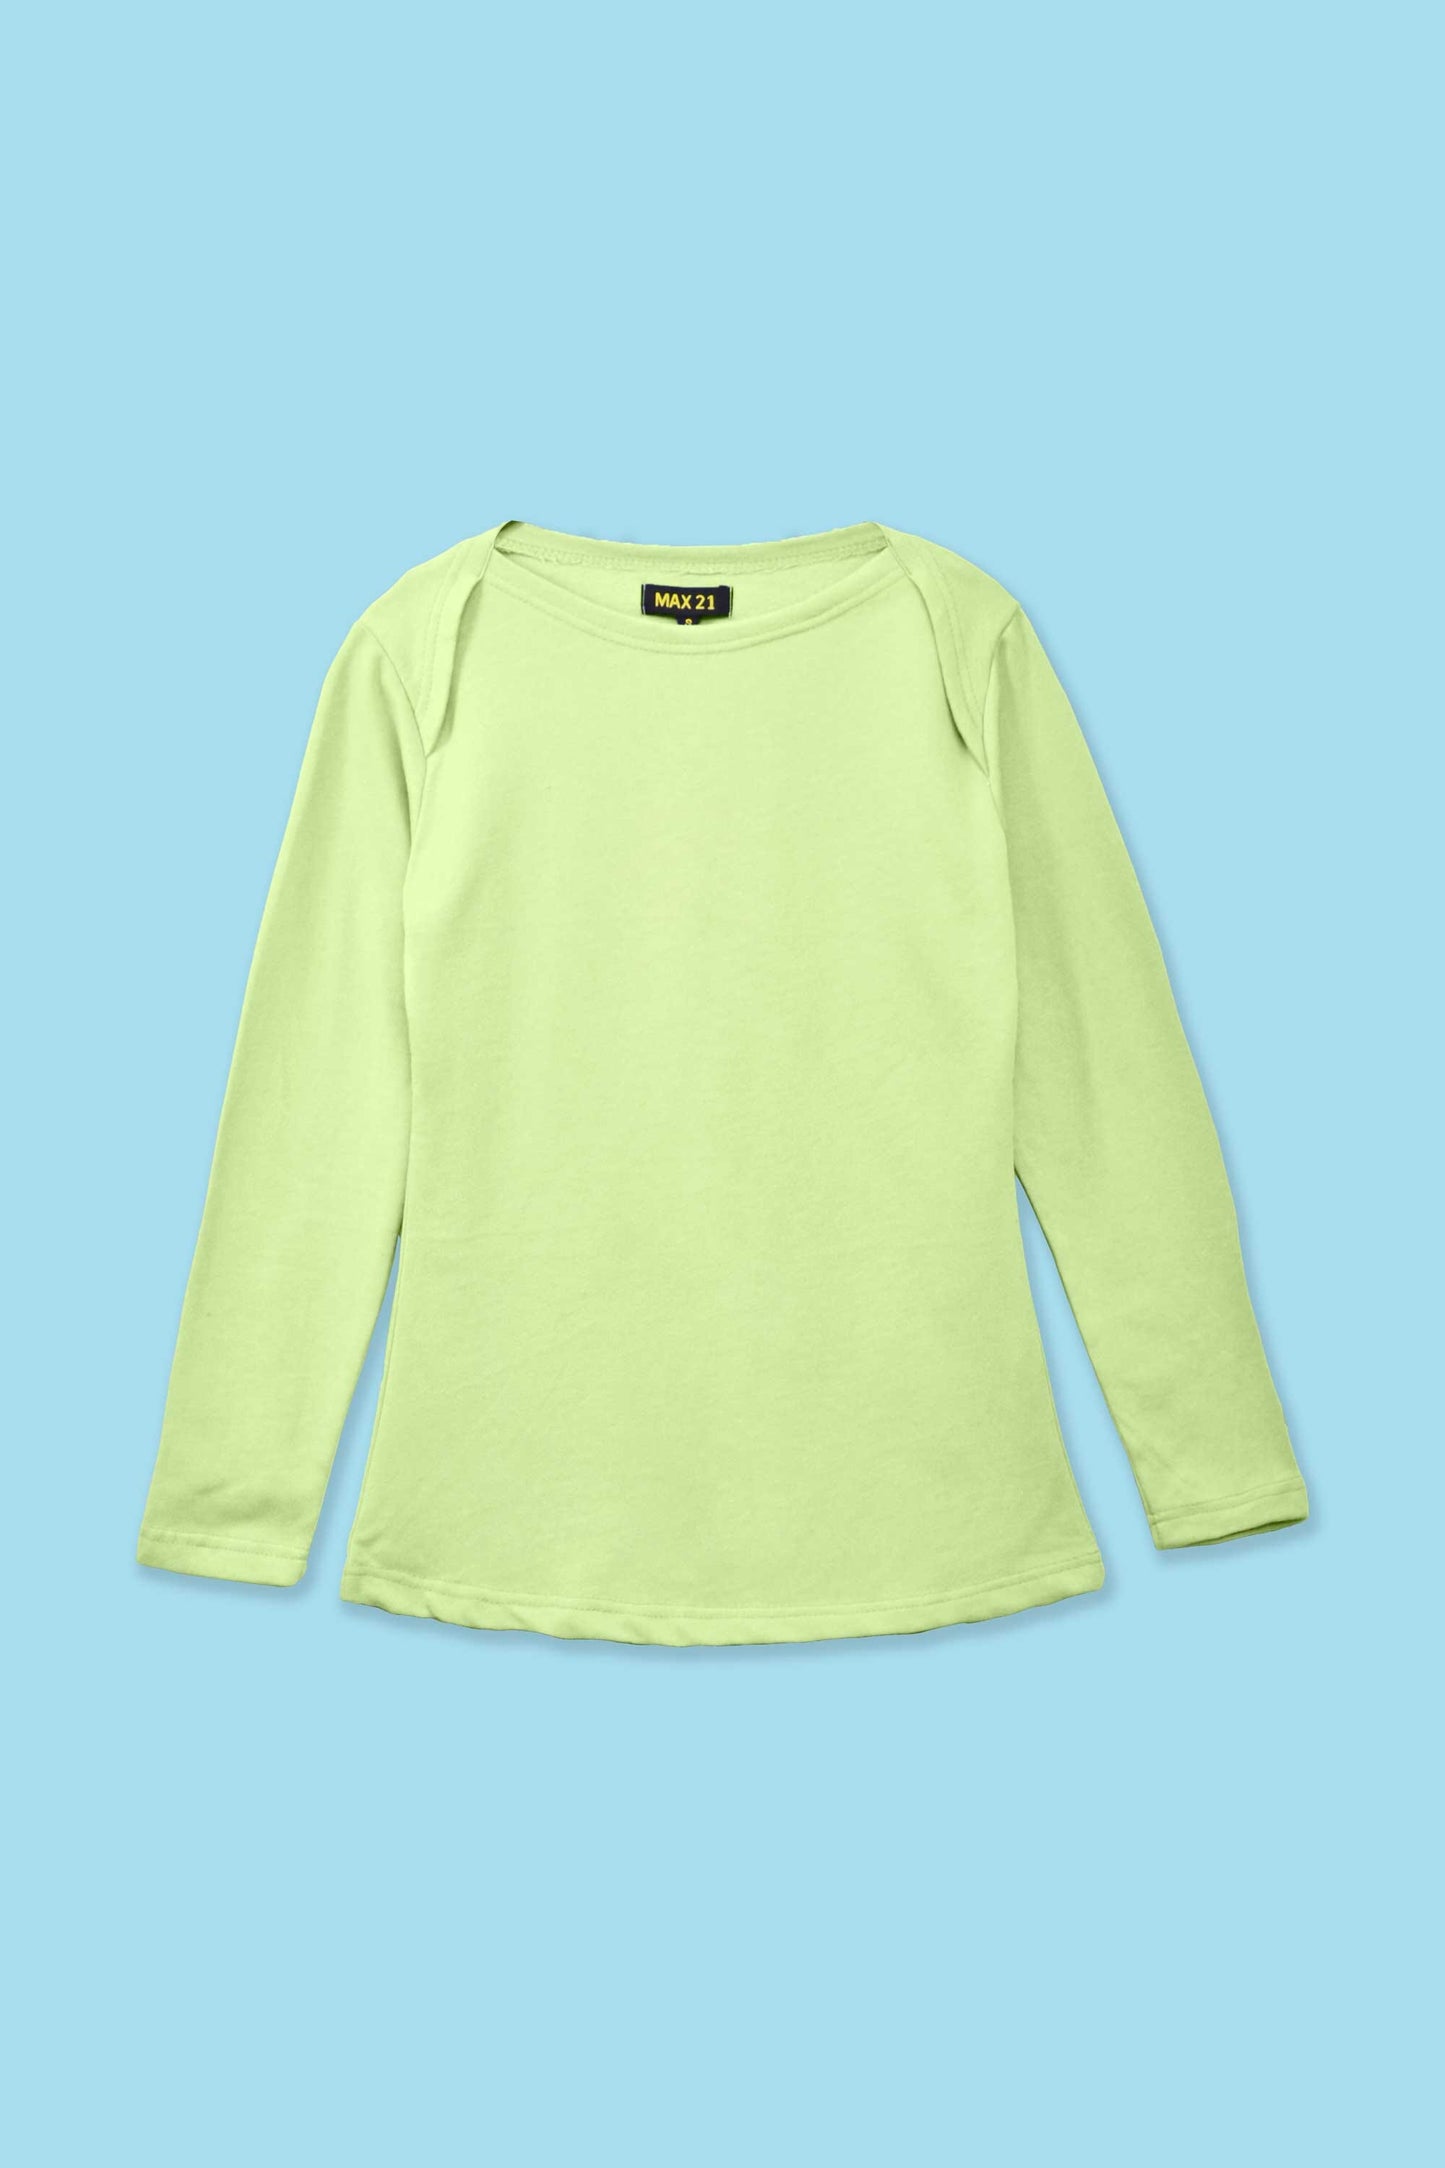 Max 21 Women’s Stylish Long Sleeves Sweat Shirt Women's Casual Shirt SZK Lime S 